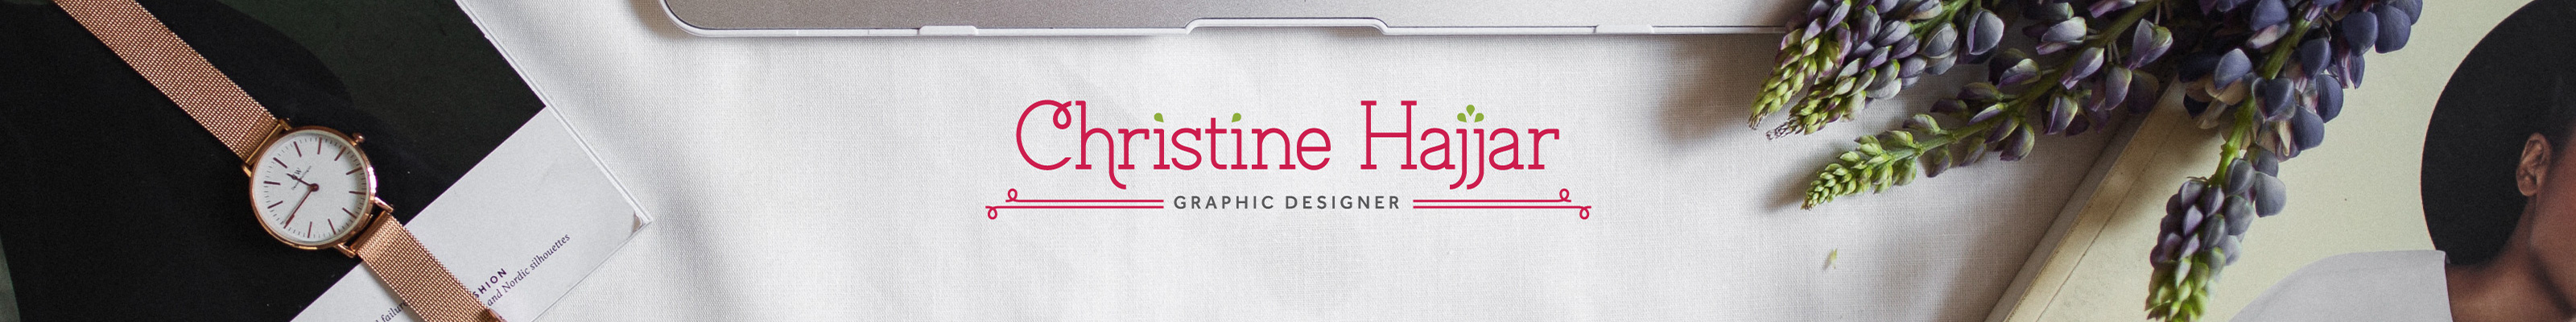 Banner de perfil de Christine Hajjar